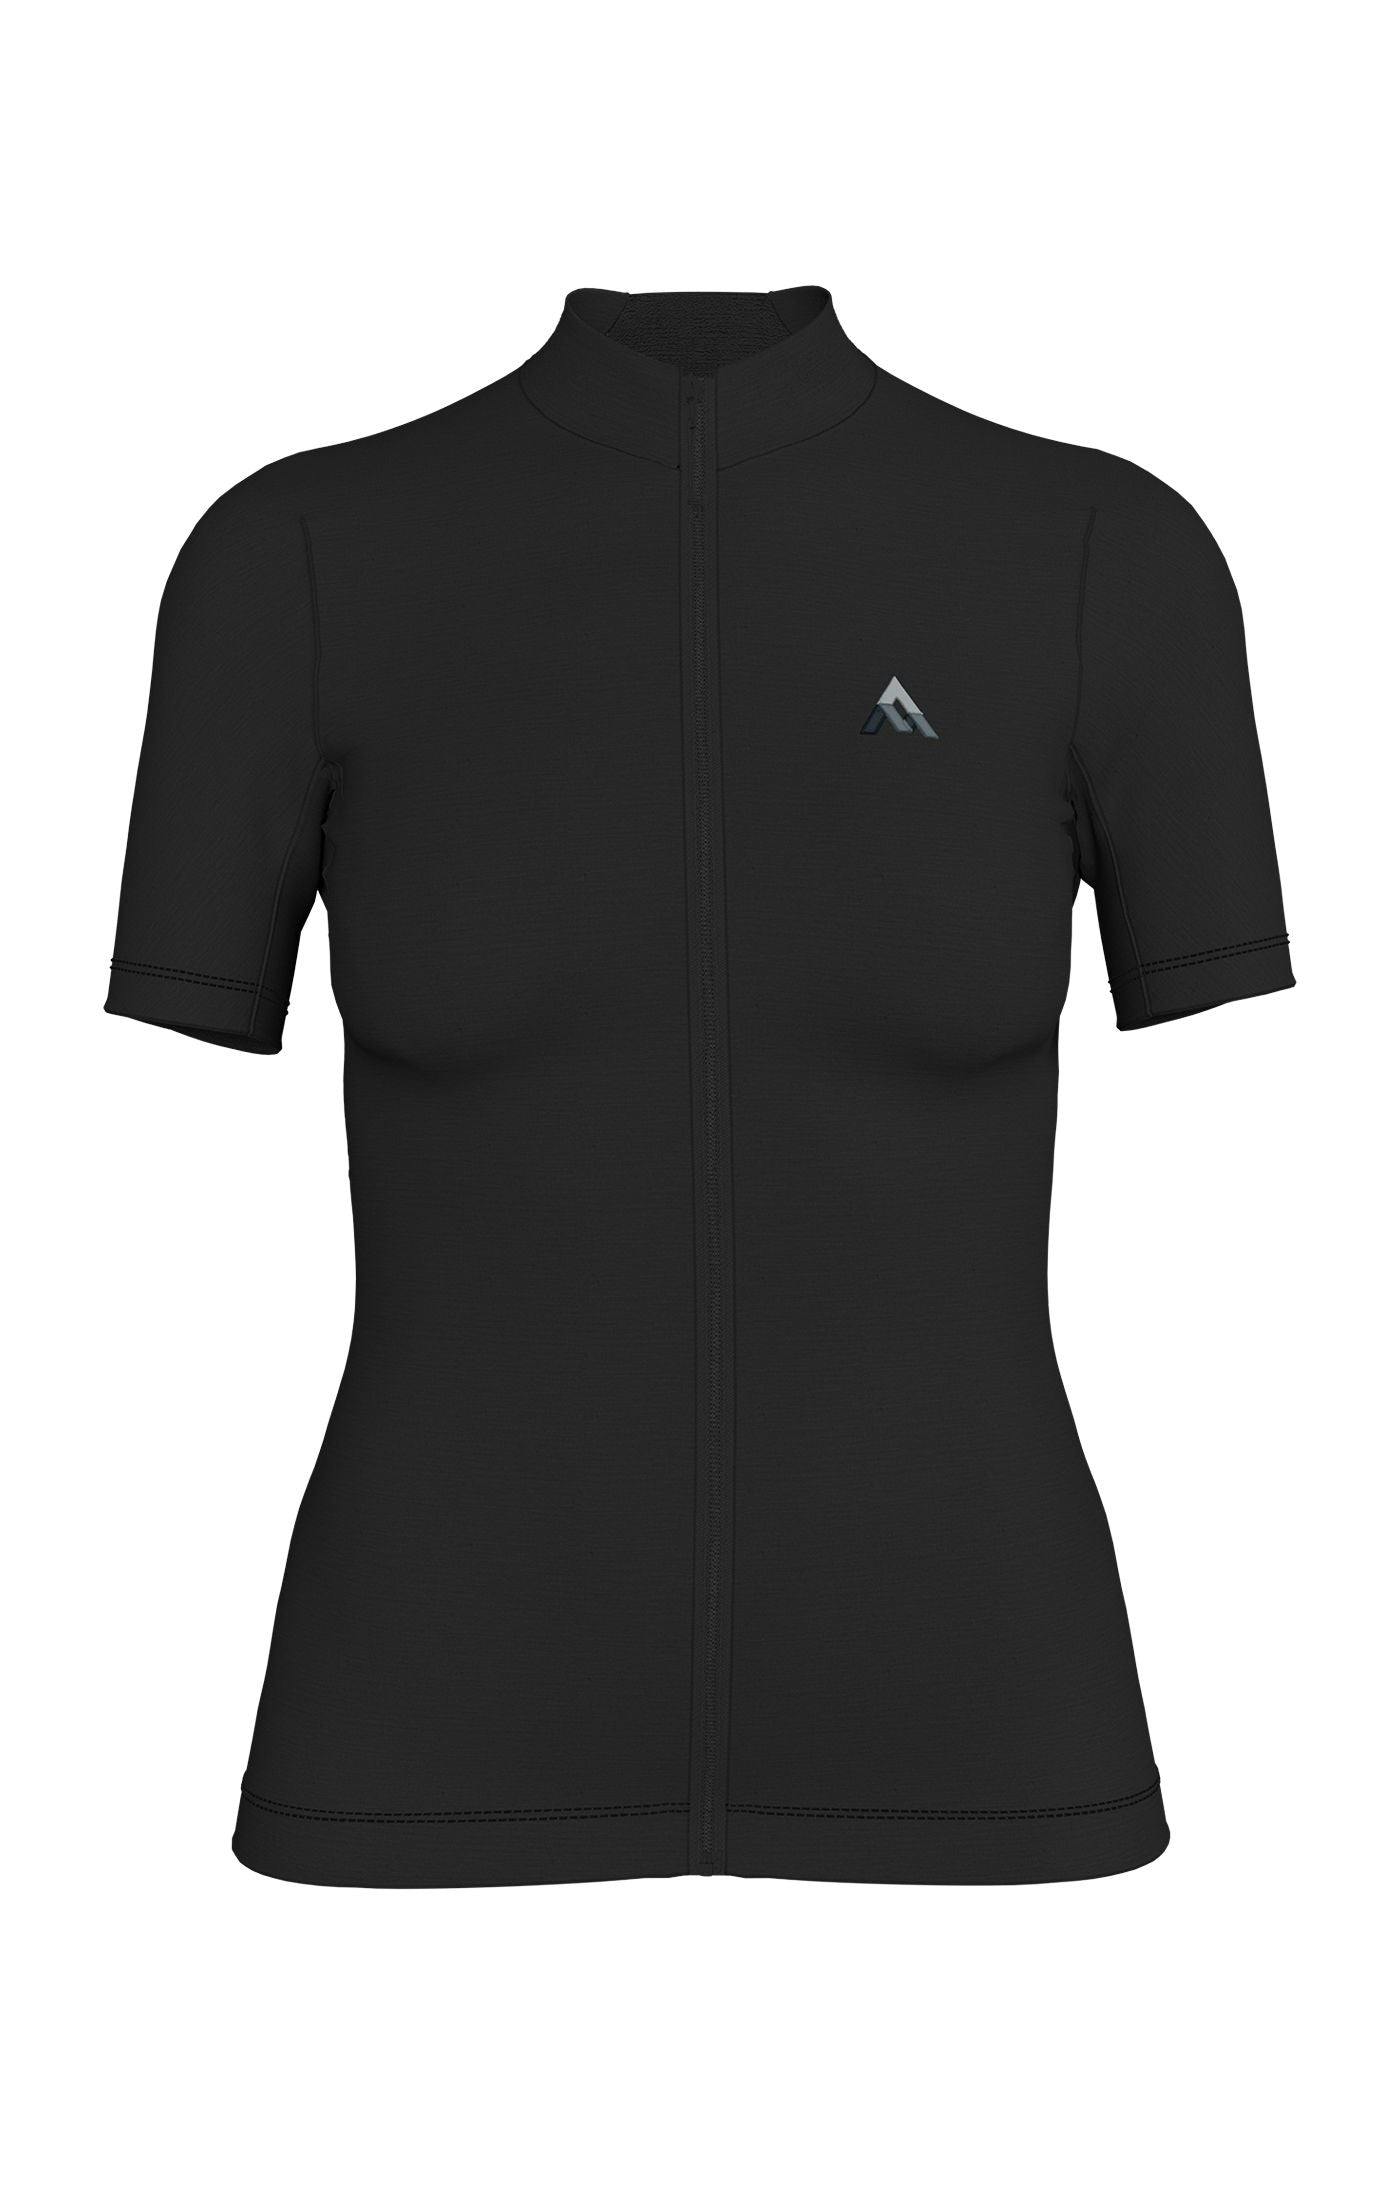 Ashlu - Women's short sleeve merino jersey - Black